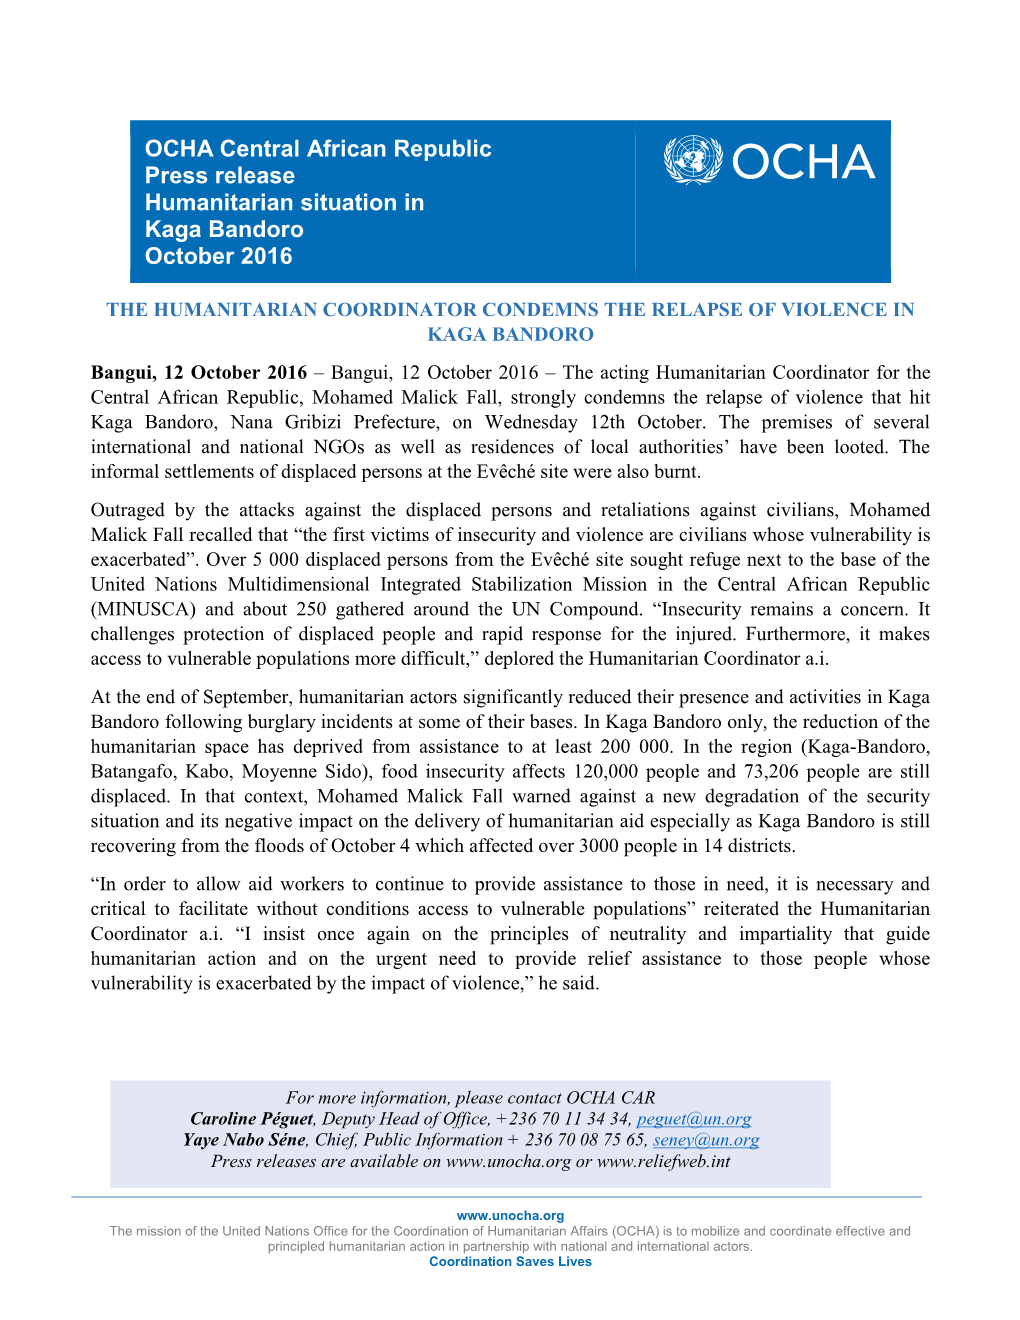 OCHA Central African Republic Press Release Humanitarian Situation in Kaga Bandoro October 2016